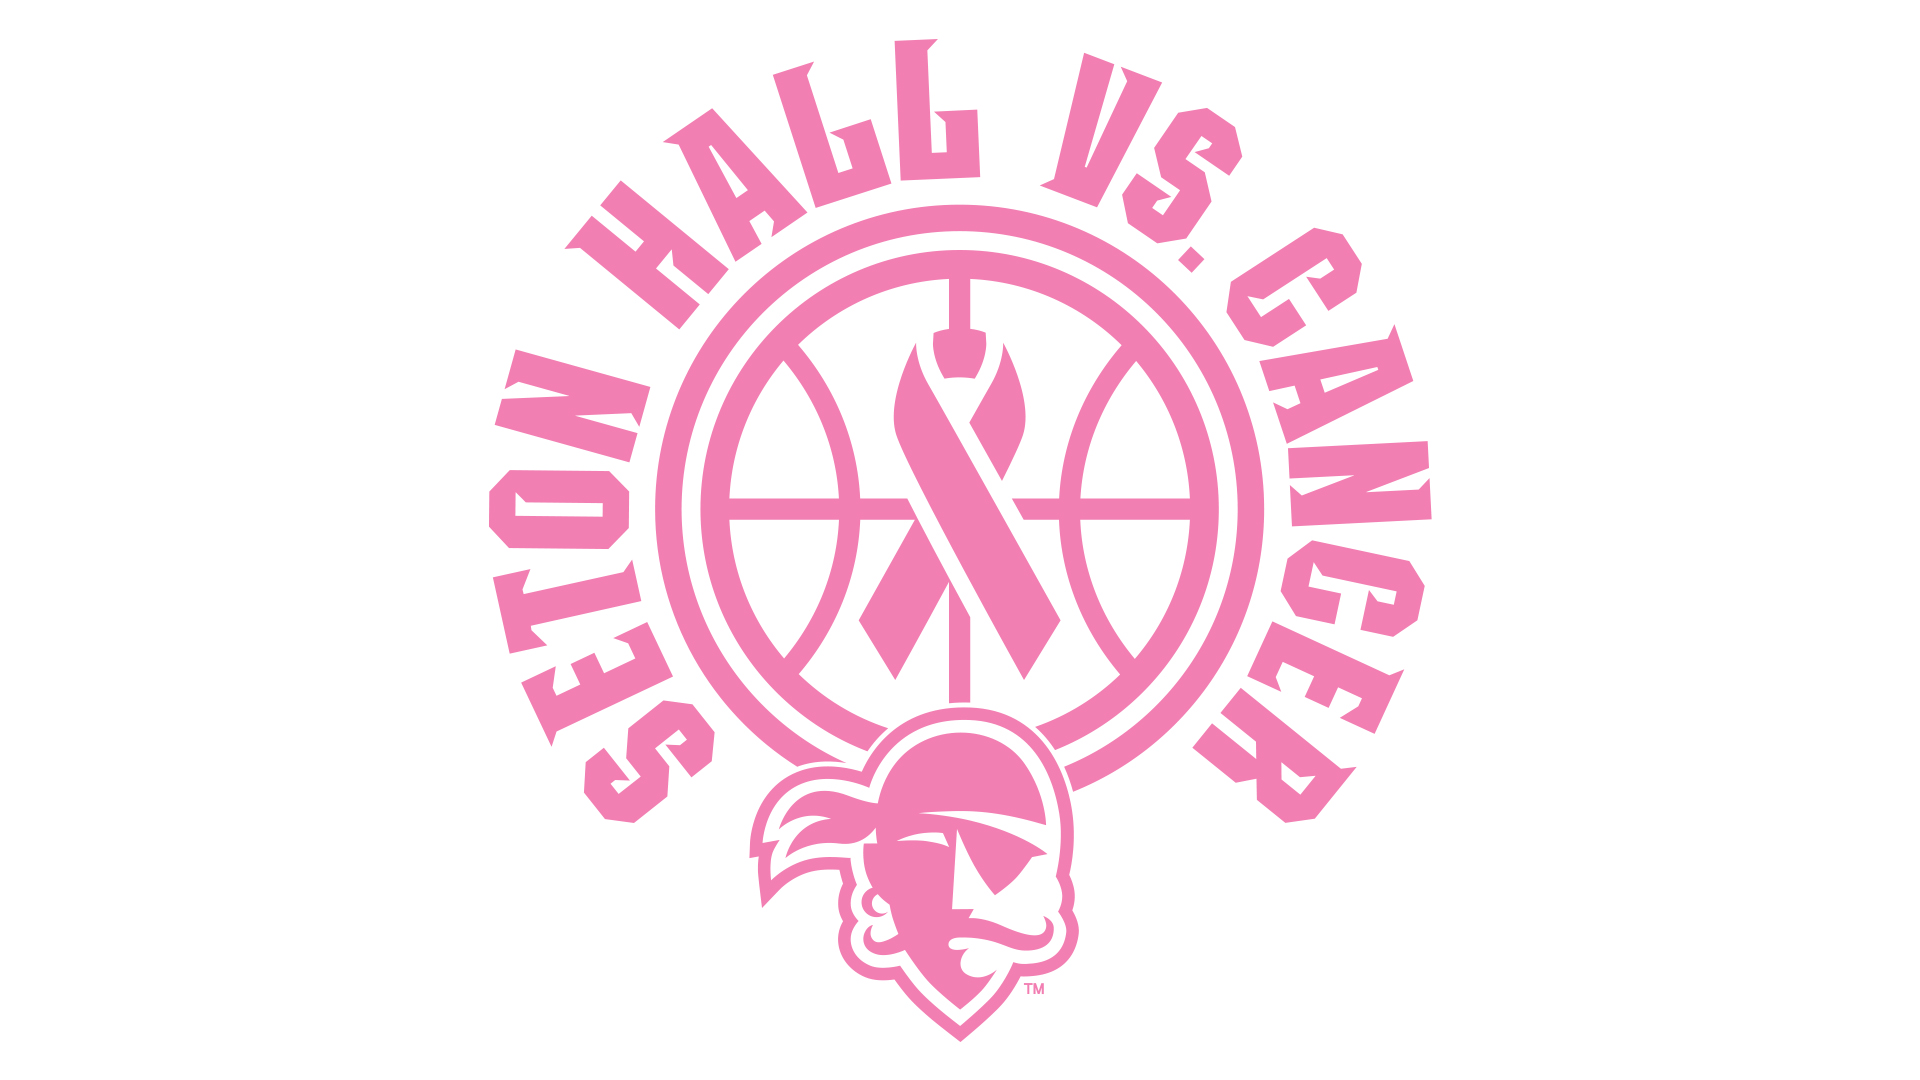 Seton Hall vs. Cancer Logo